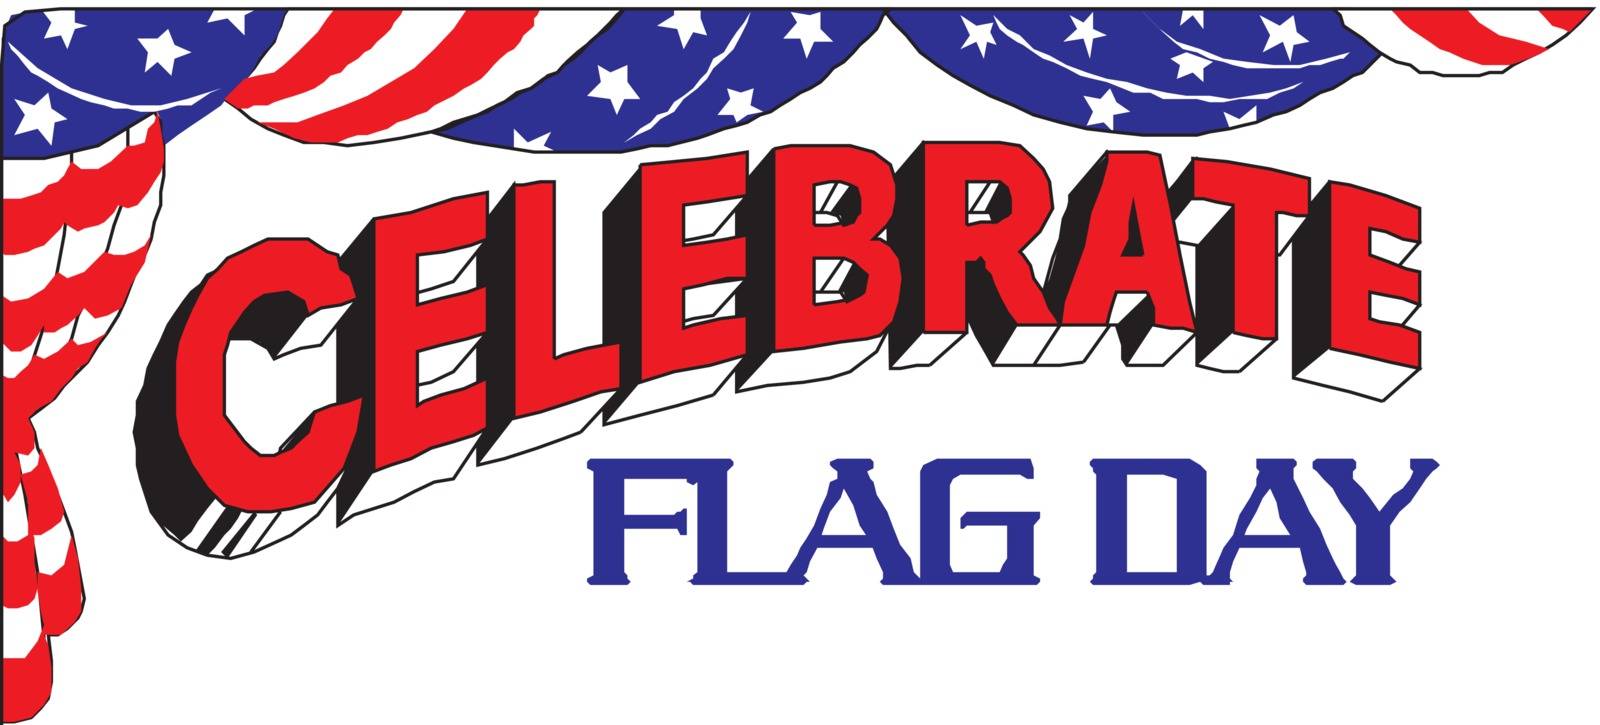 Celebrate Flag Day